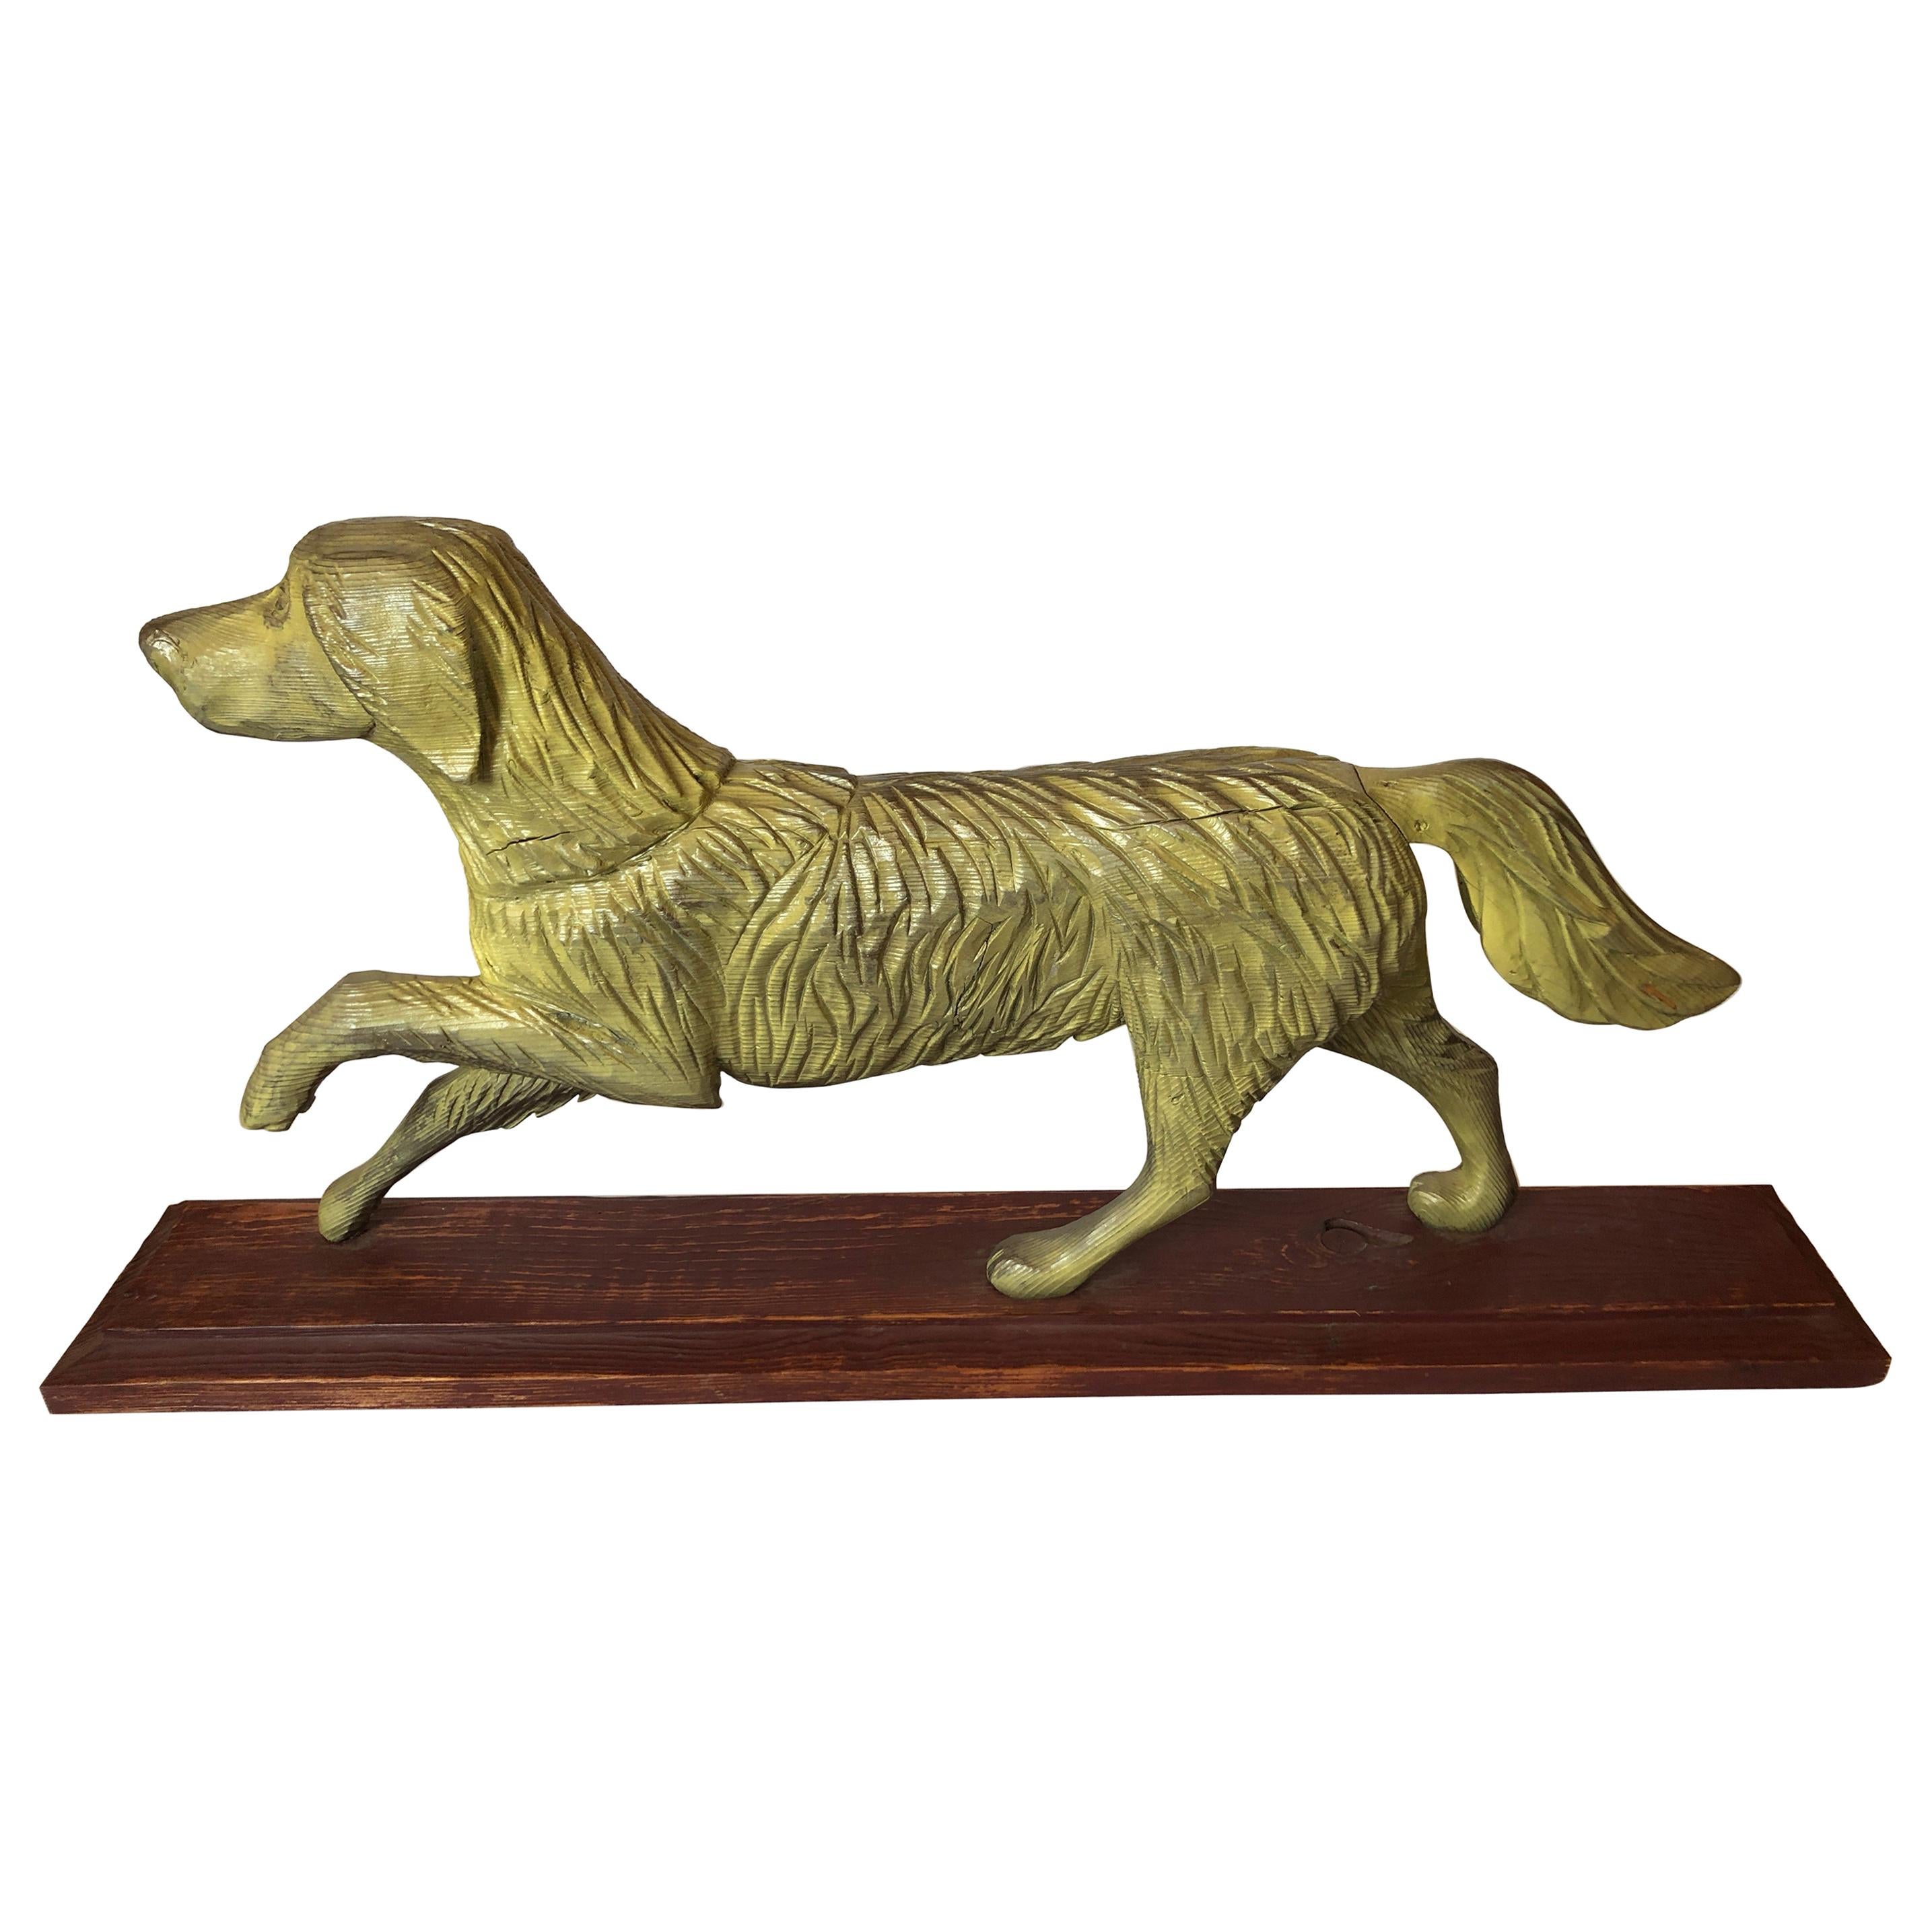 Rustic Vintage Sculpture of a Prancing Retriever Dog